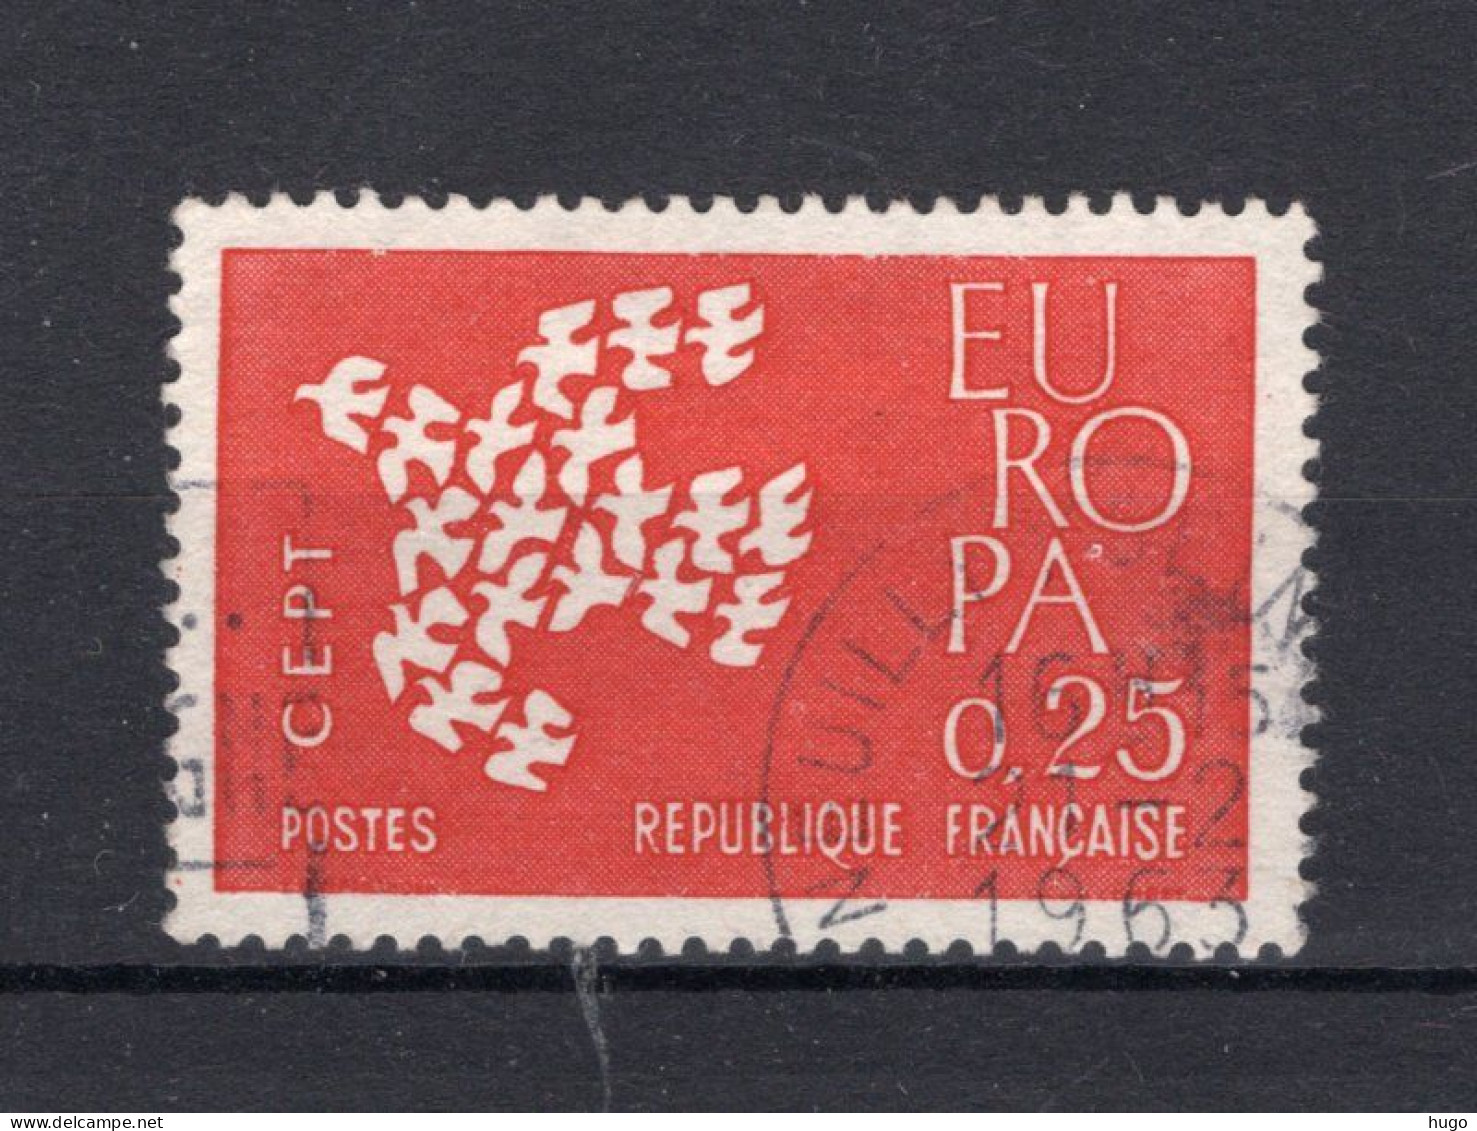 (B) Frankrijk CEPT 1363° Gestempeld 1961 - 1961